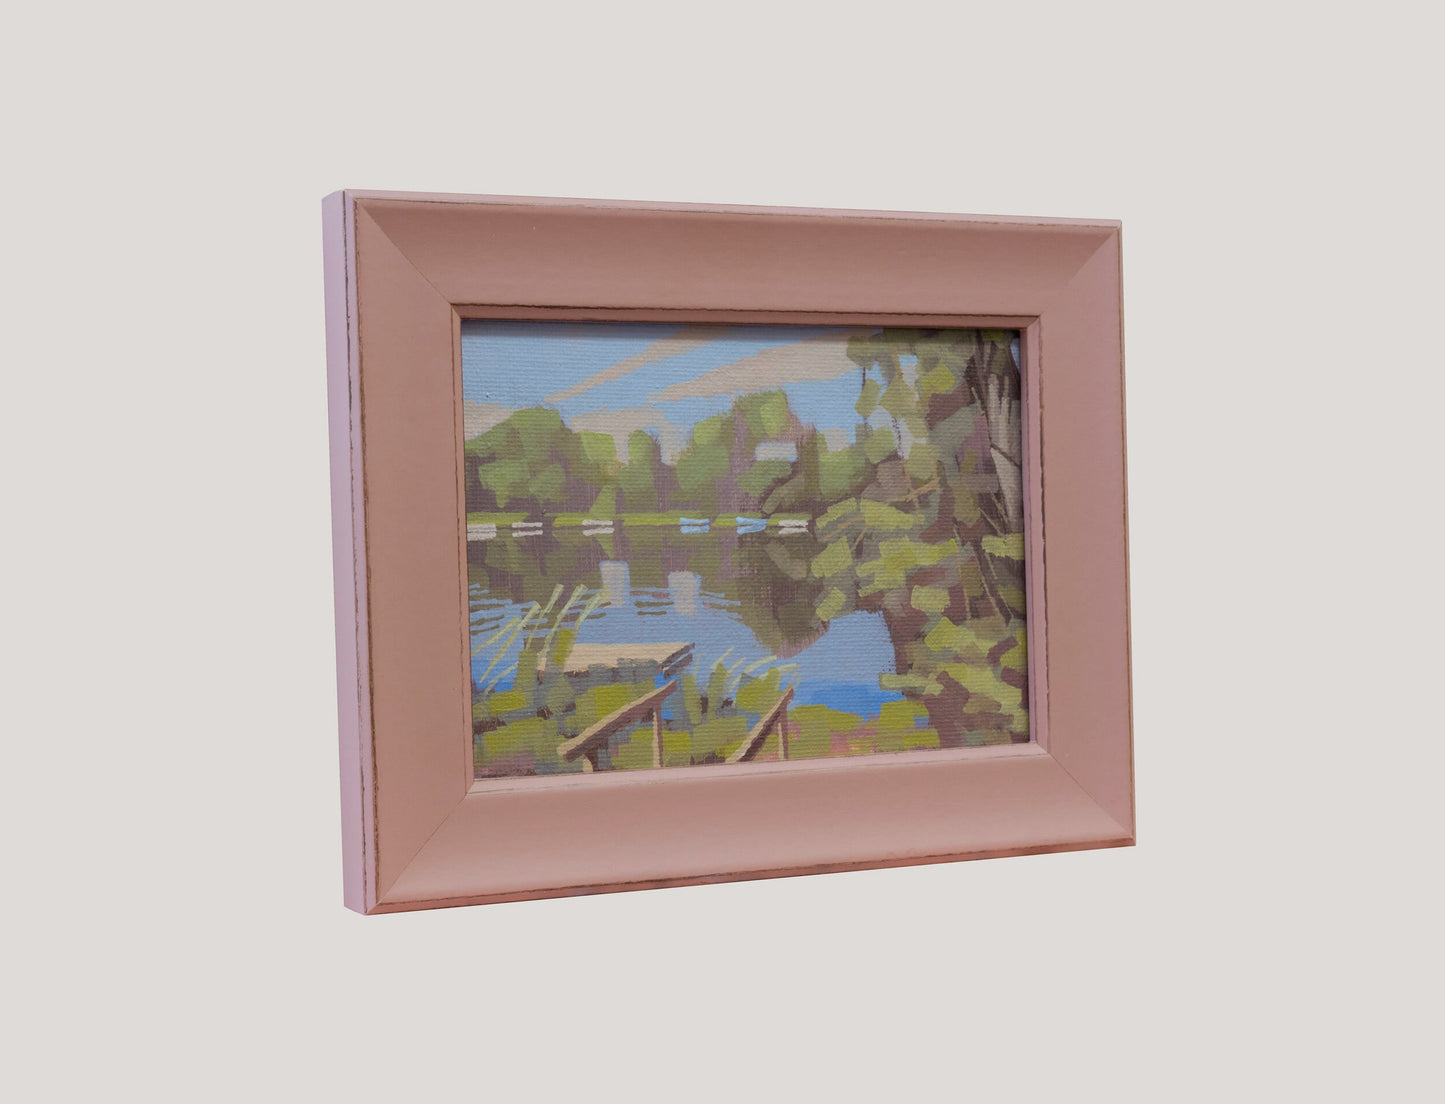 Original painting - "River Bank" - hand painted - acrylic painting - 10x15 cm - landscape picture - unique piece - with frame